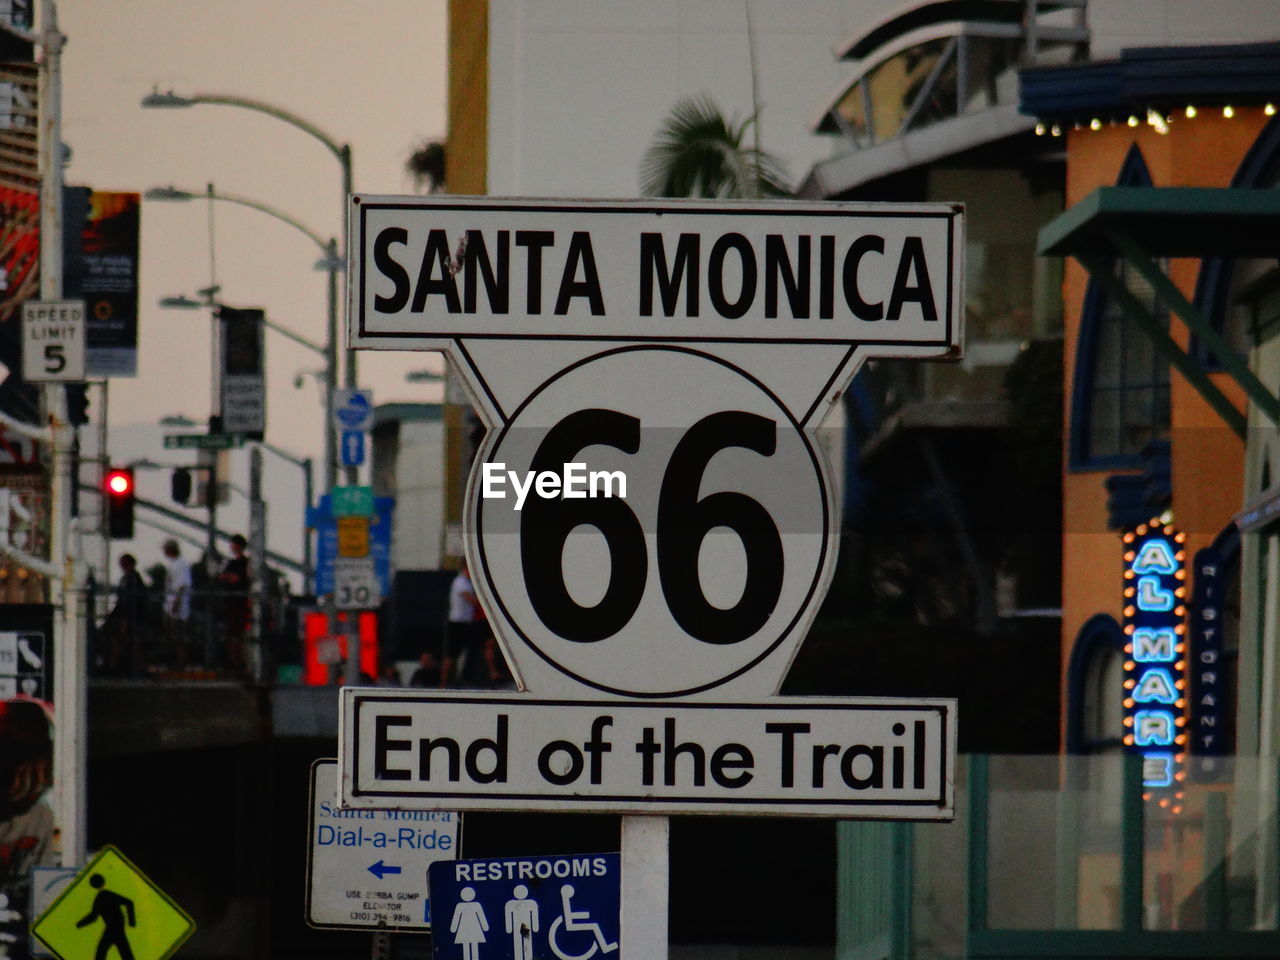 Route 66 sign in santa monica